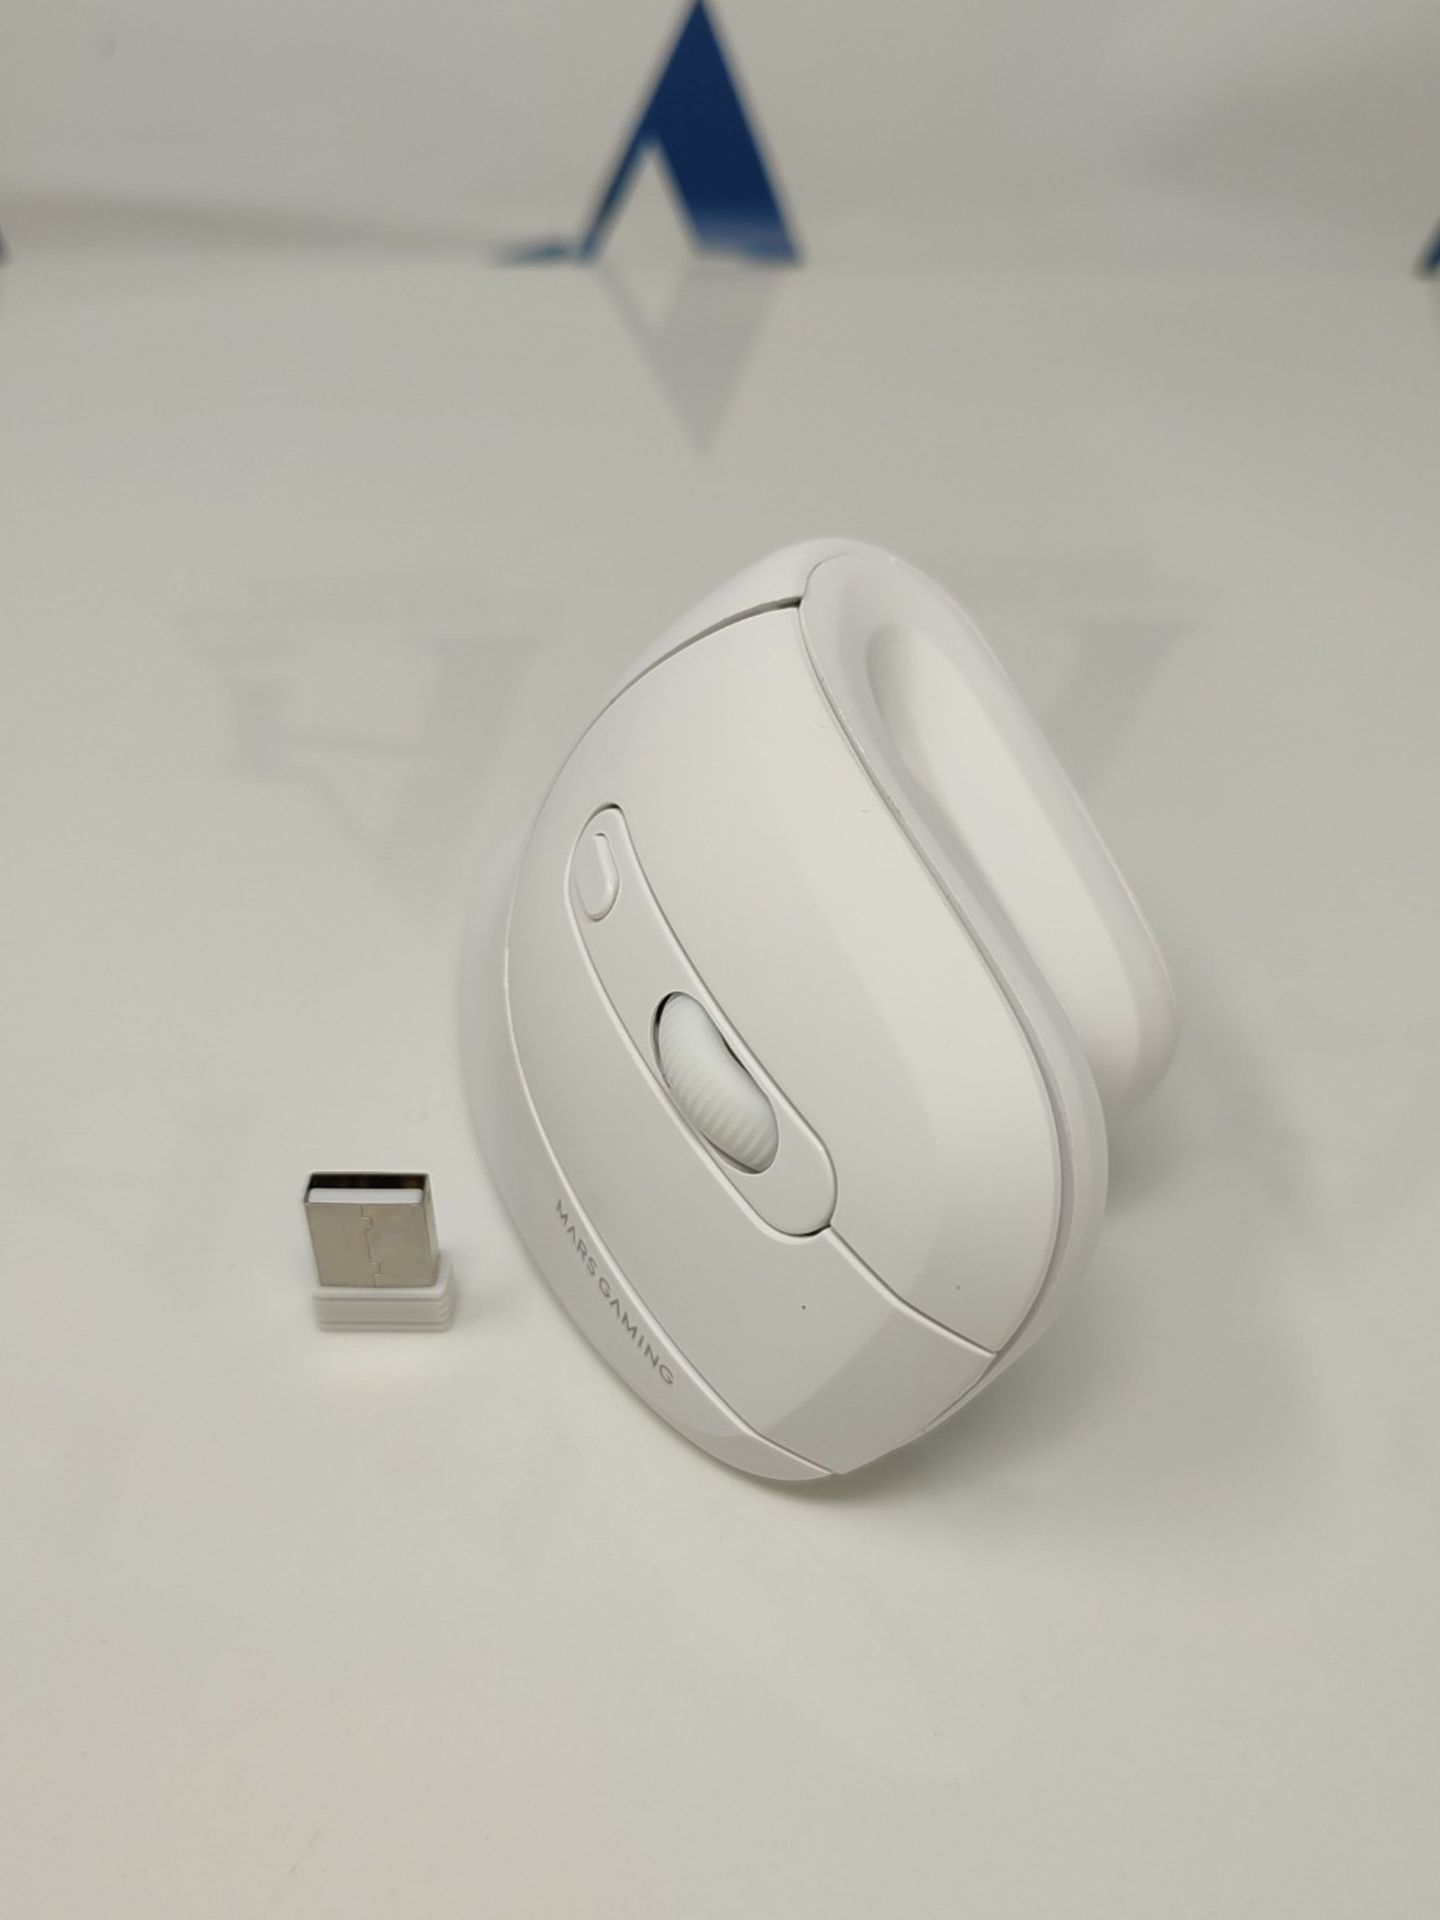 Mars Gaming MMW-ERGOPRO White, Ergonomic Vertical Wireless Mouse, Foldable Design, Opt - Image 3 of 3